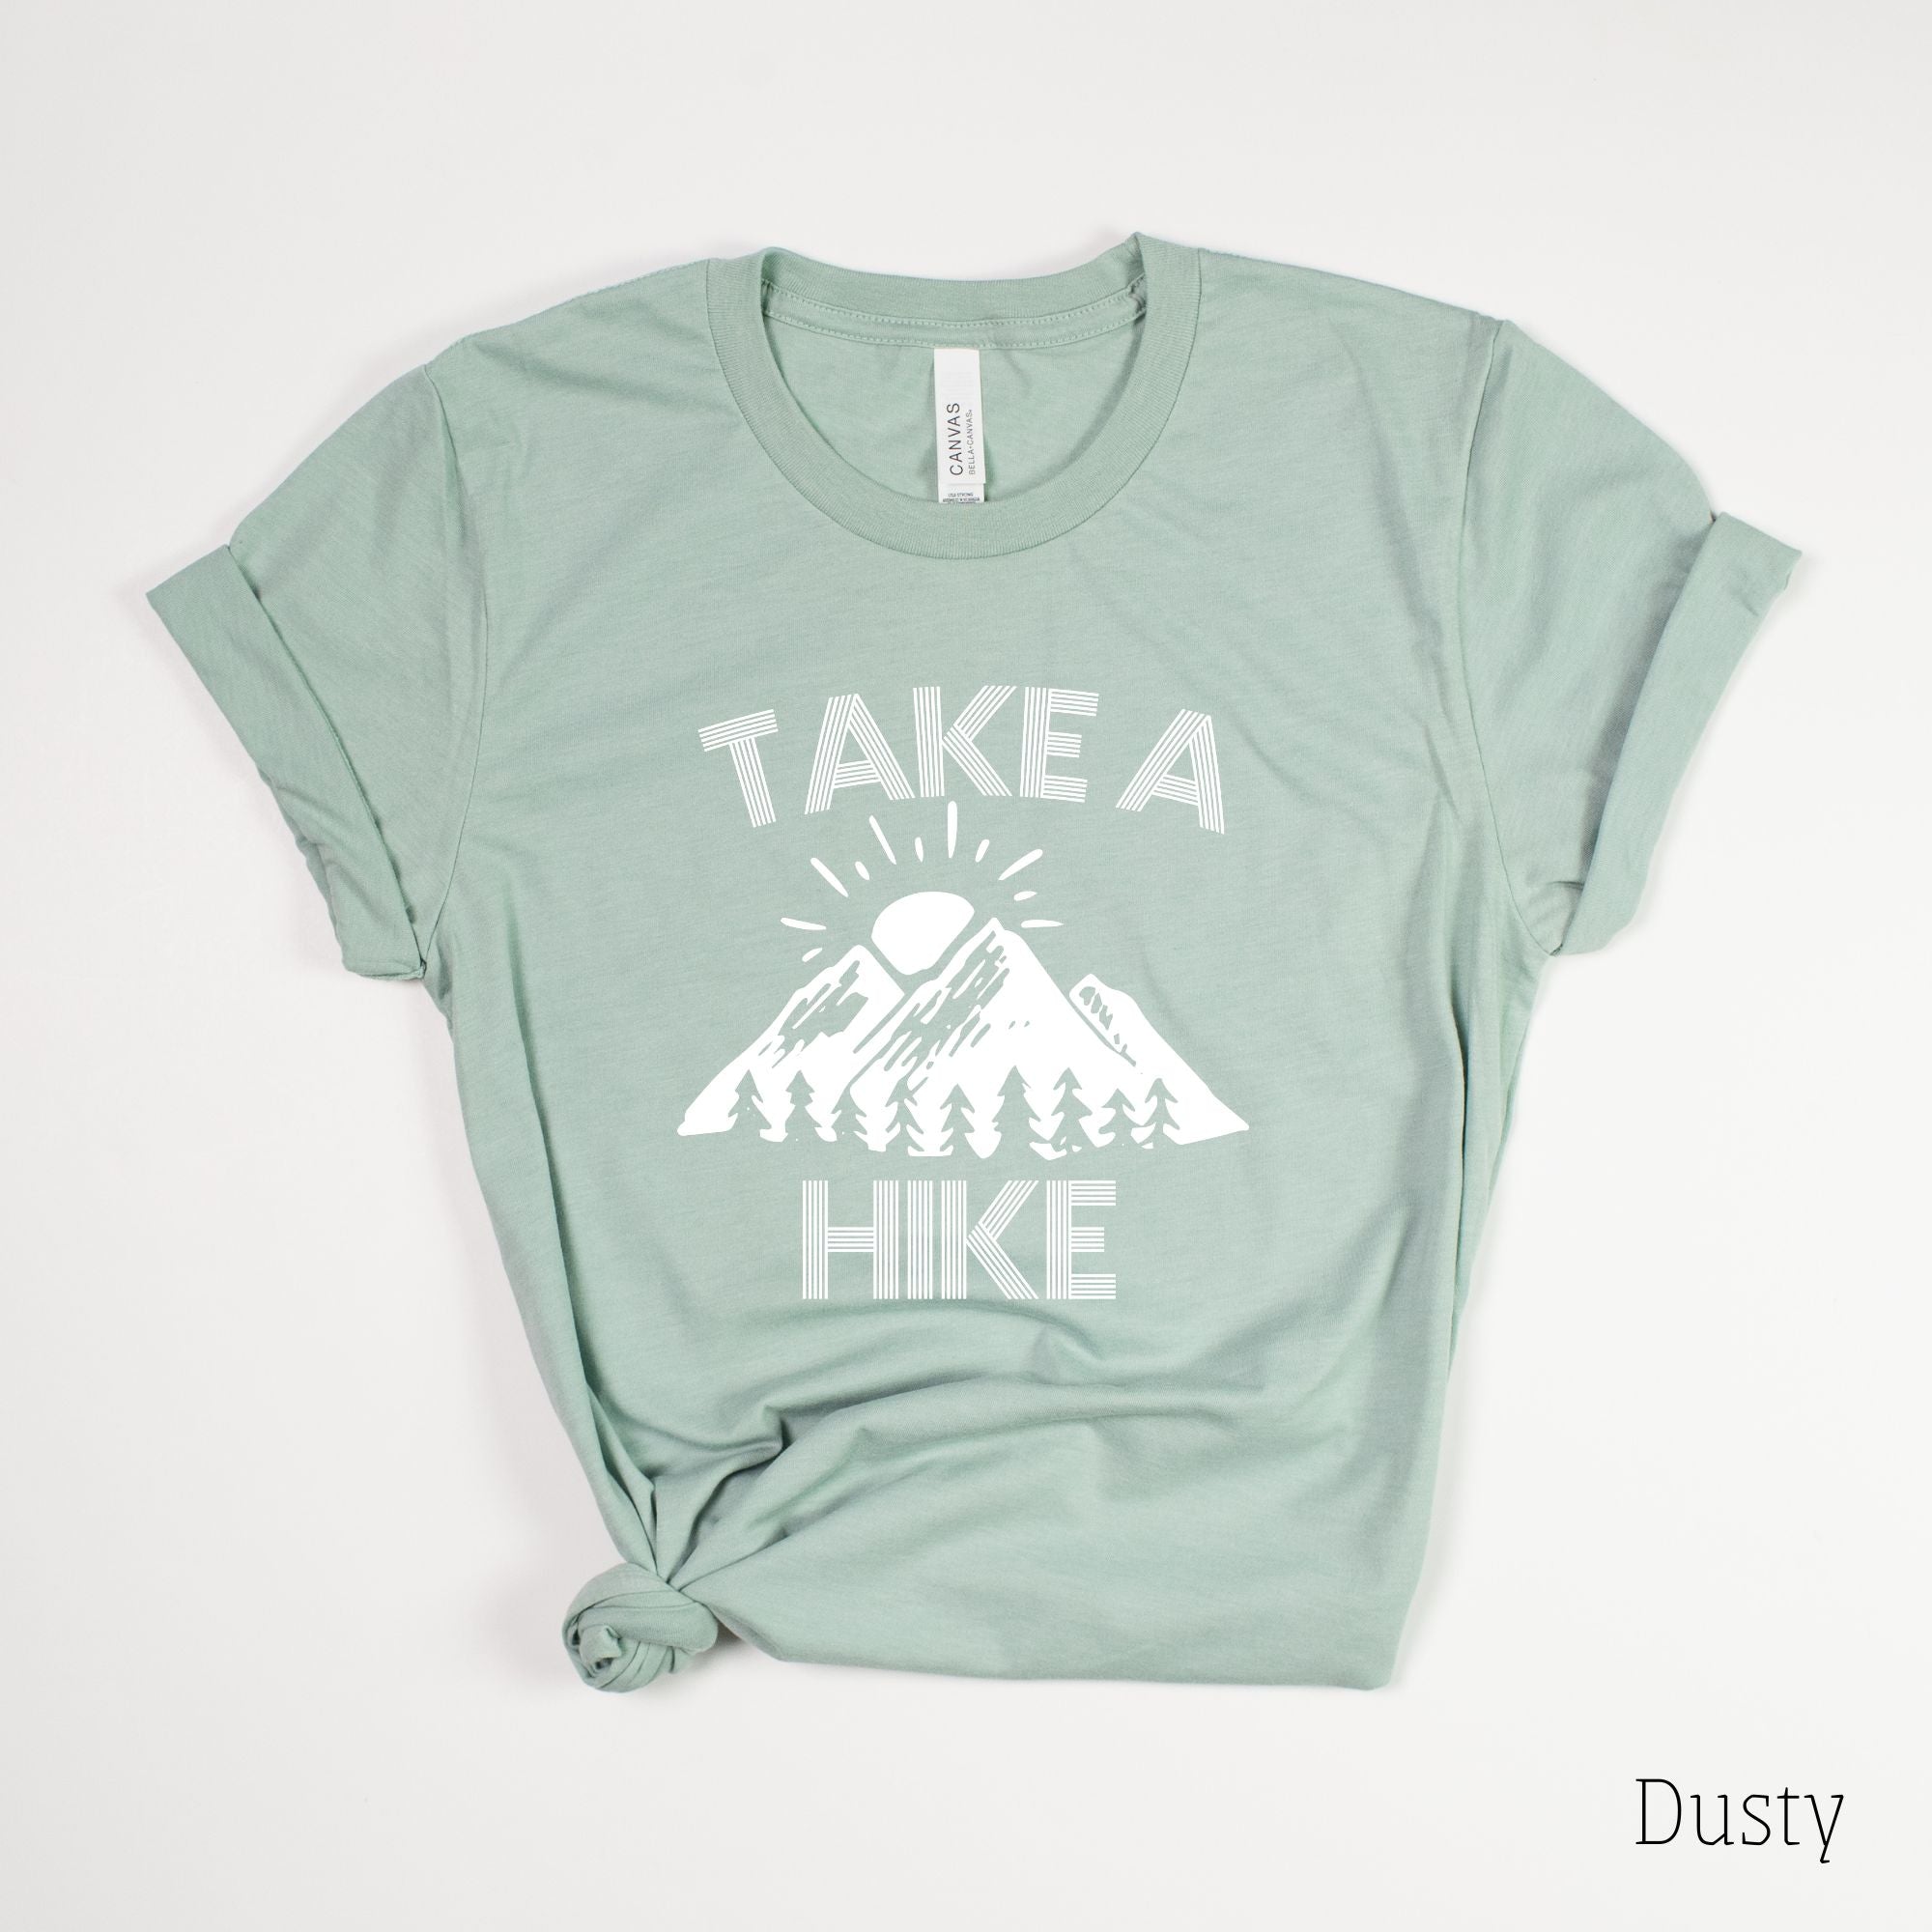 Take A Hike Shirt, Hiking Graphic Tee *UNISEX FIT*-208 Tees Wholesale, Idaho